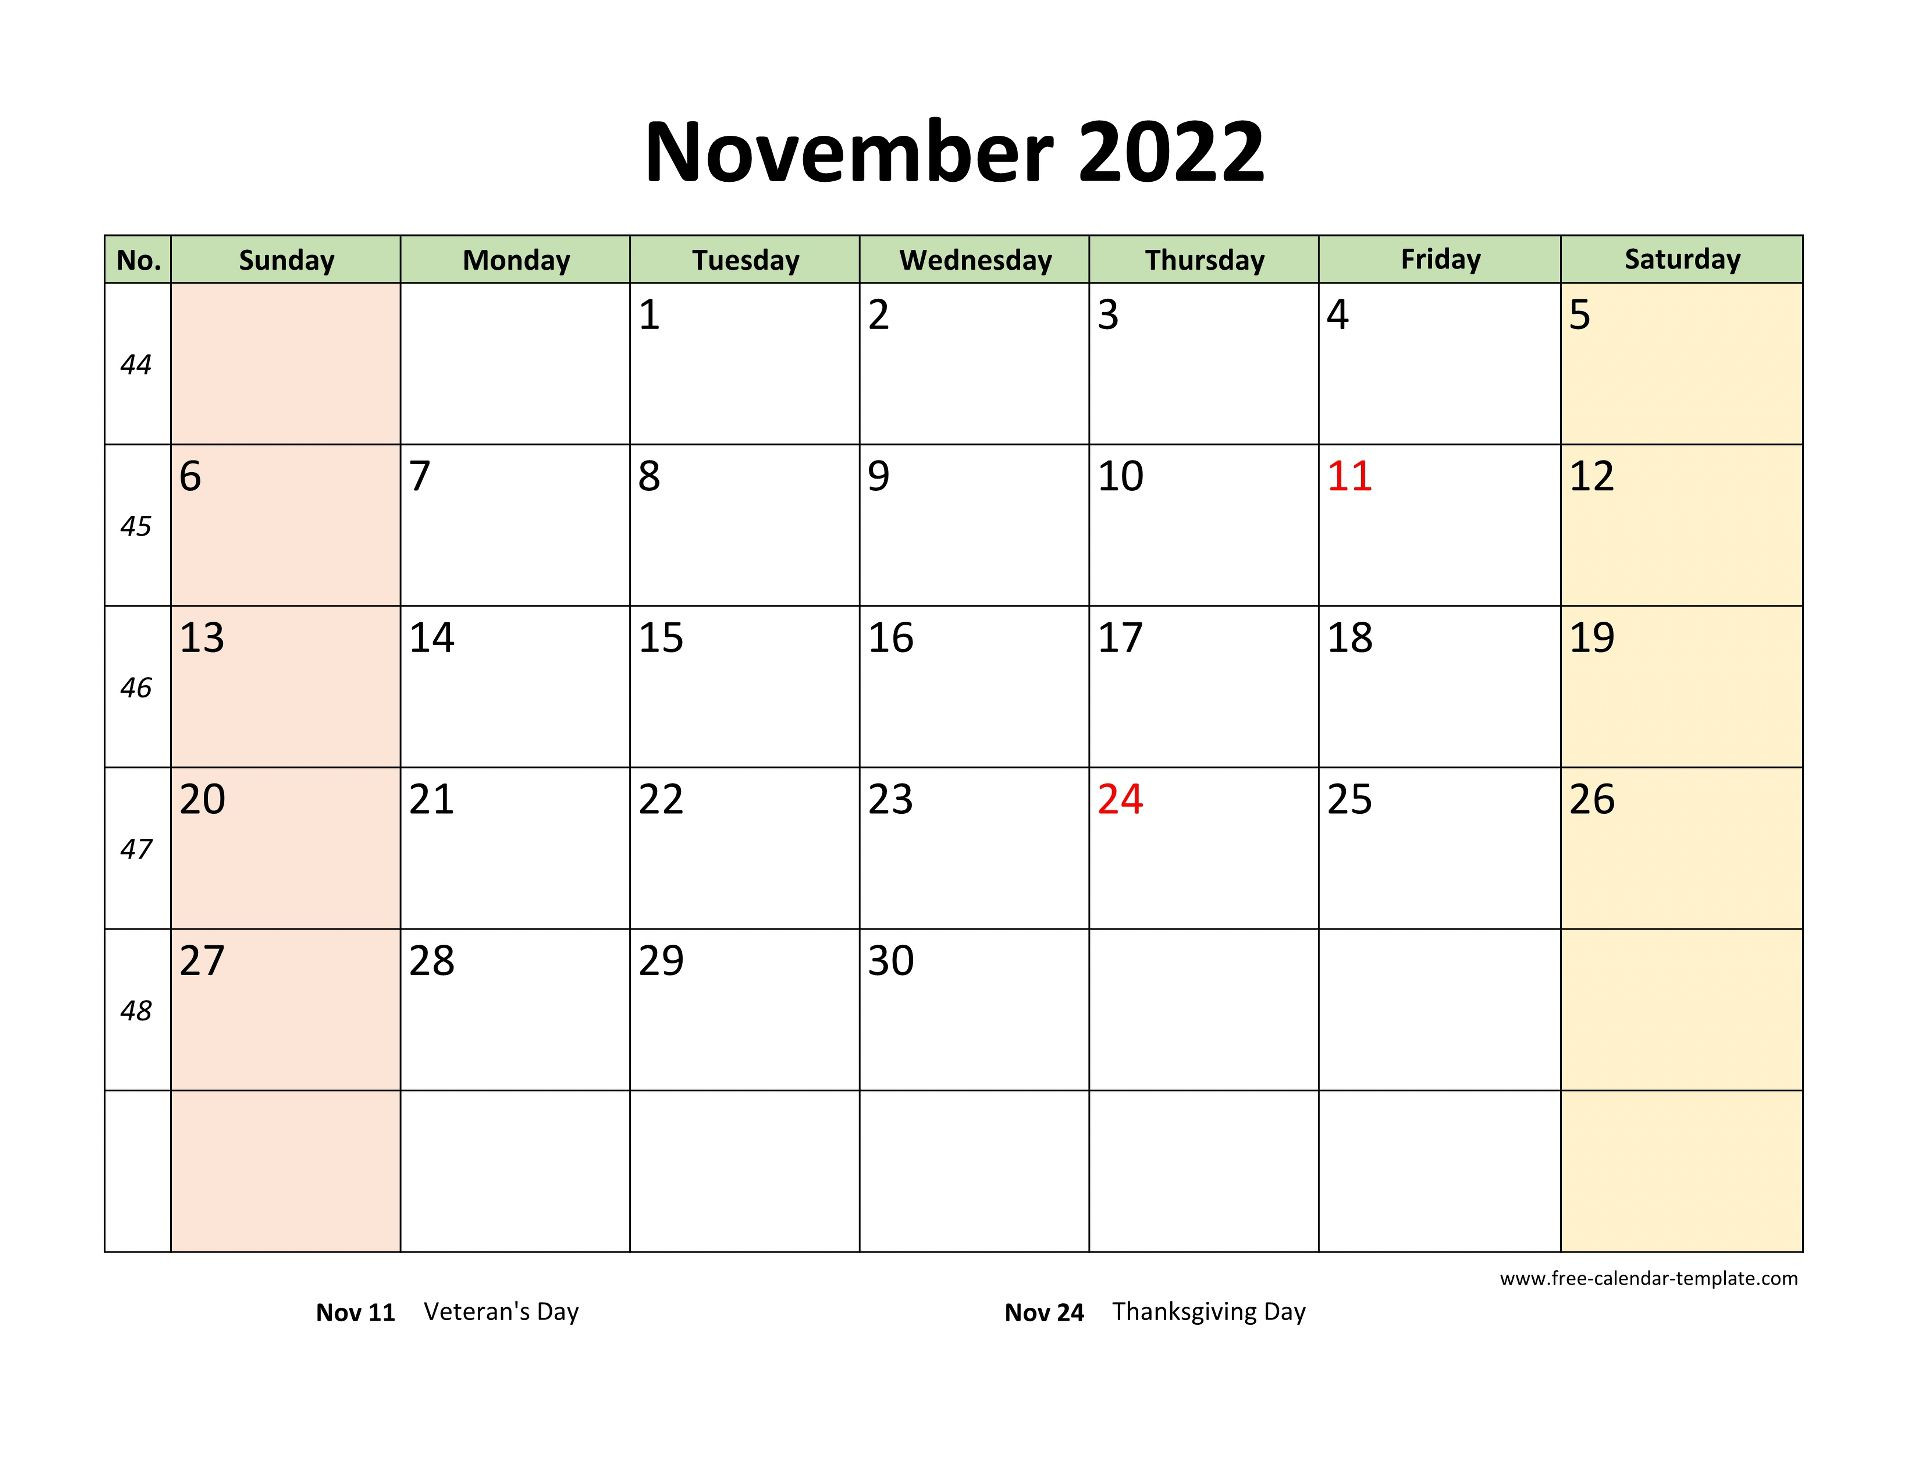 November 2022 Free Calendar Tempplate | Free-Calendar  Calendar November 2022 To May 2022